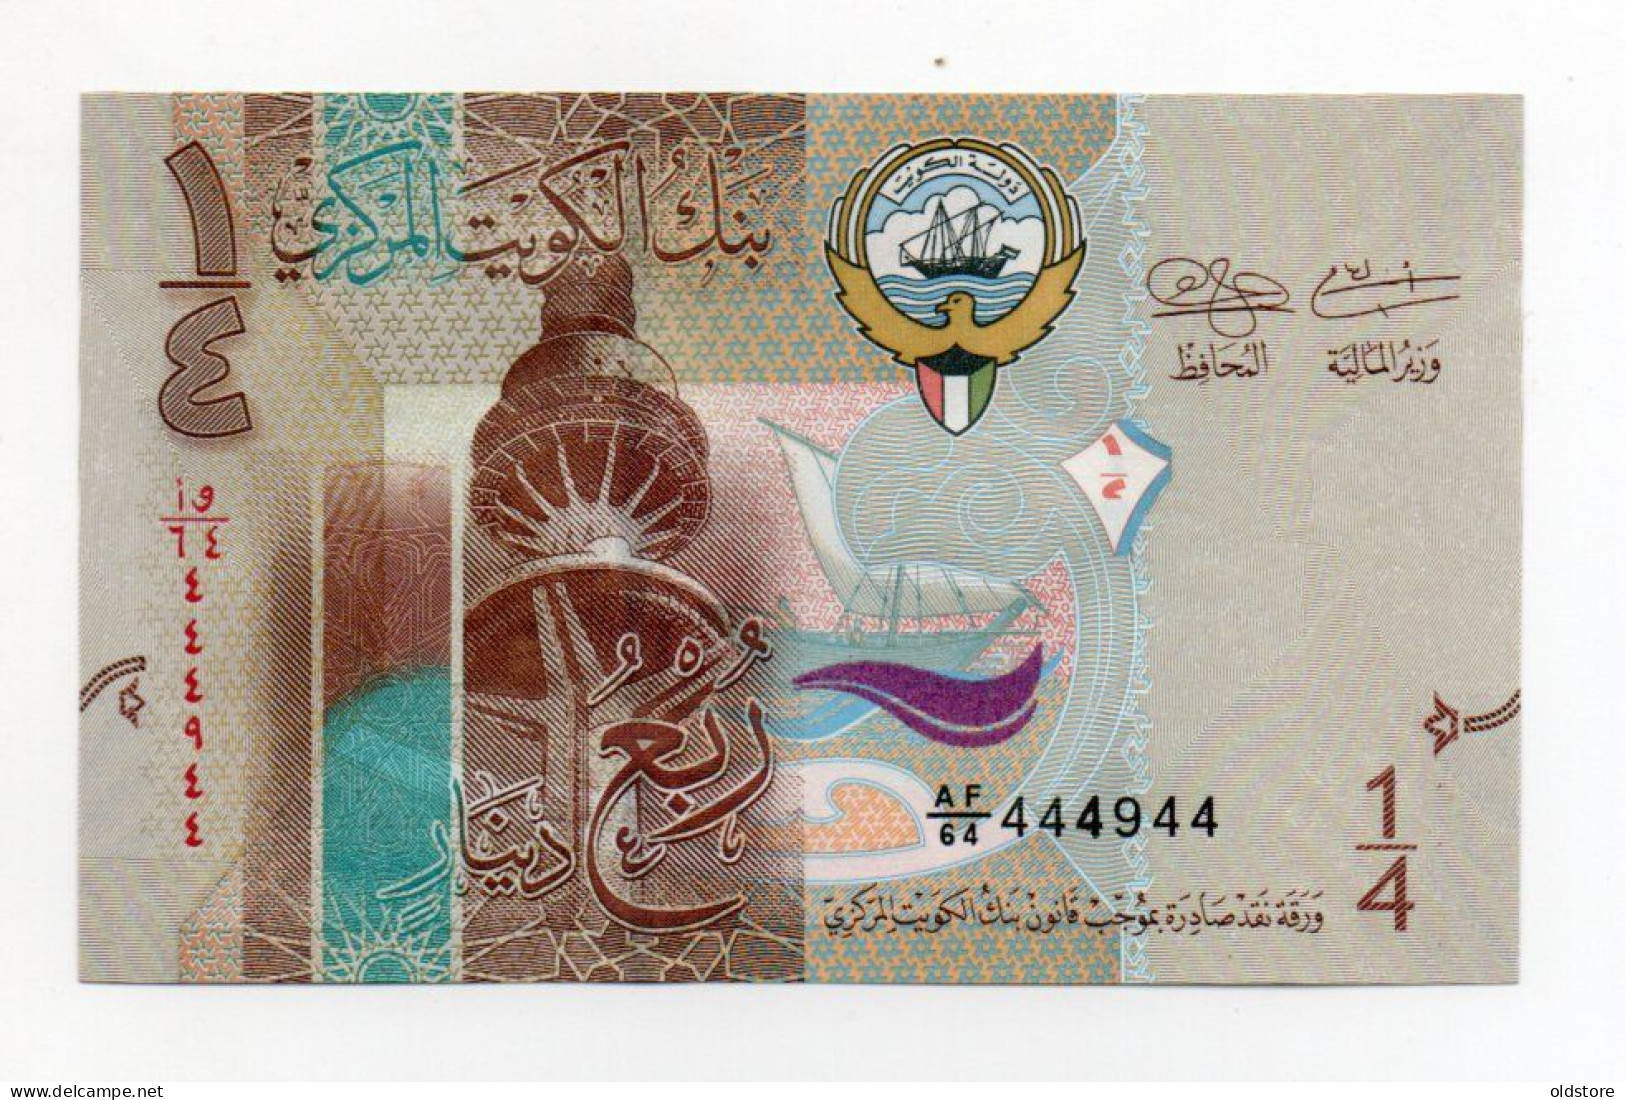 Kuwait Banknotes -  1/4 Dinar - Fancy Number 444944  - ND 2014 - UNC #1 - Koweït